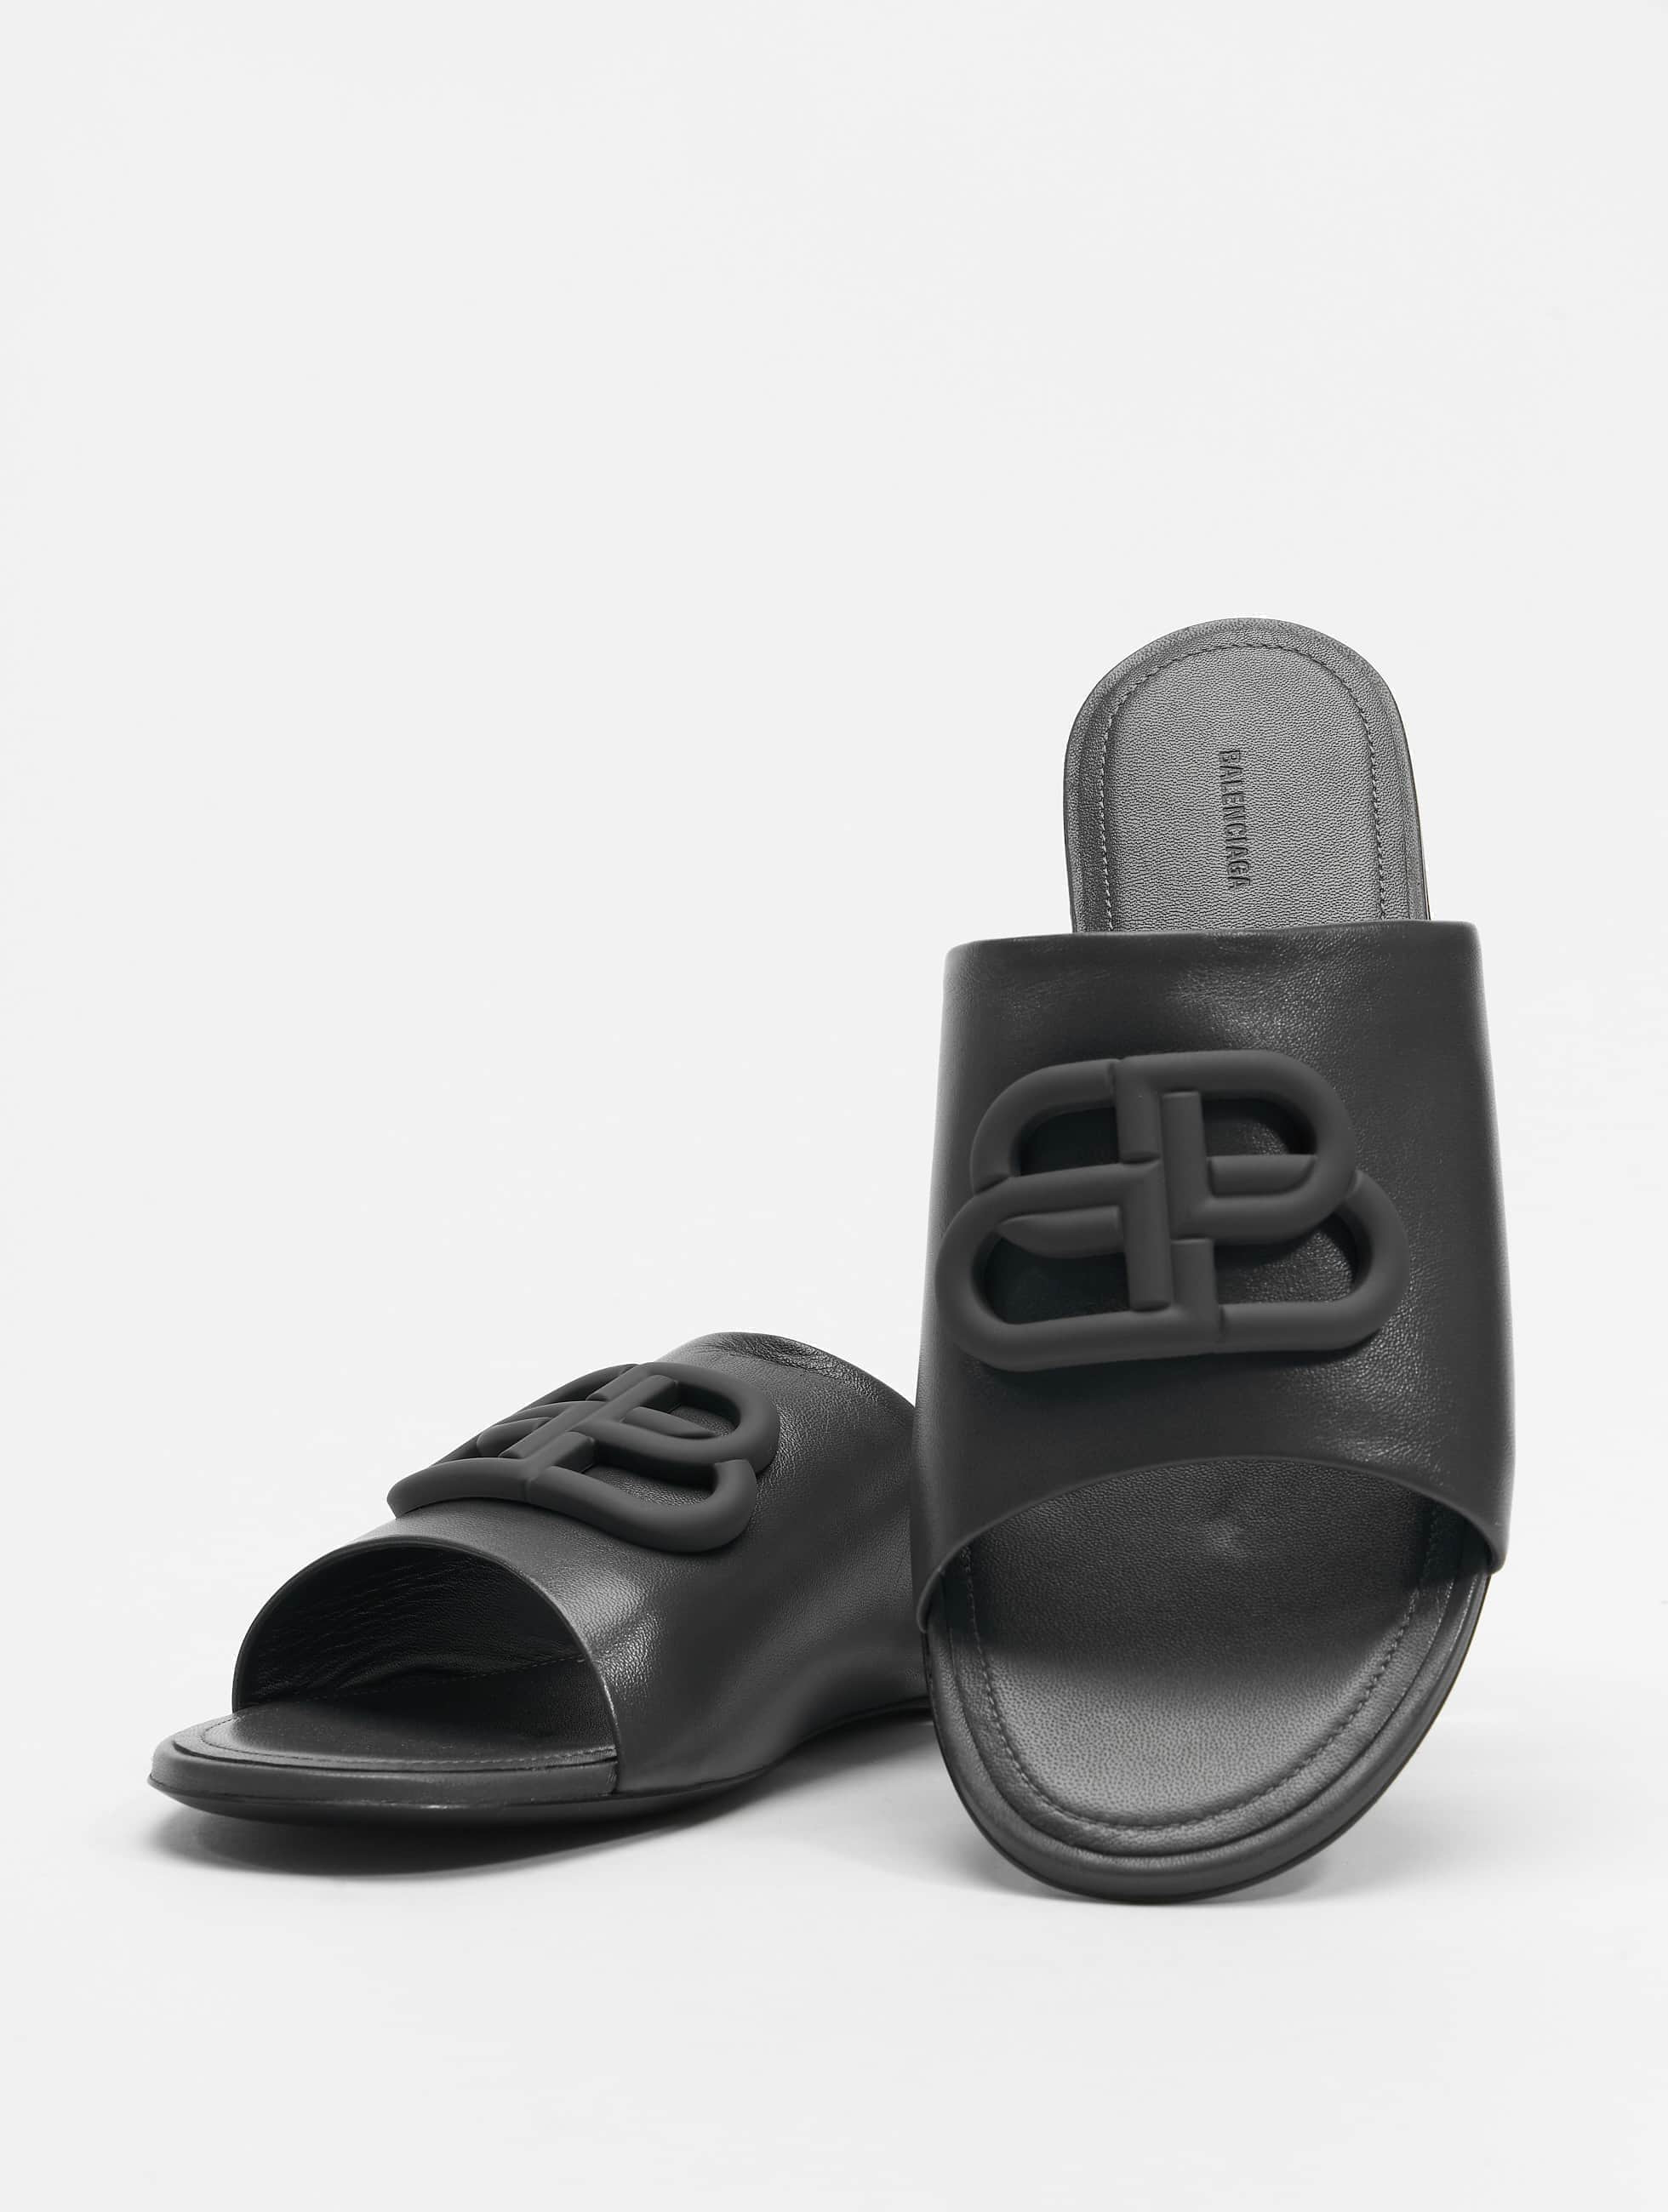 395 Women039s Balenciaga Logo Pool Slides Flat Sandals Slippers White  Black 41 EU  eBay